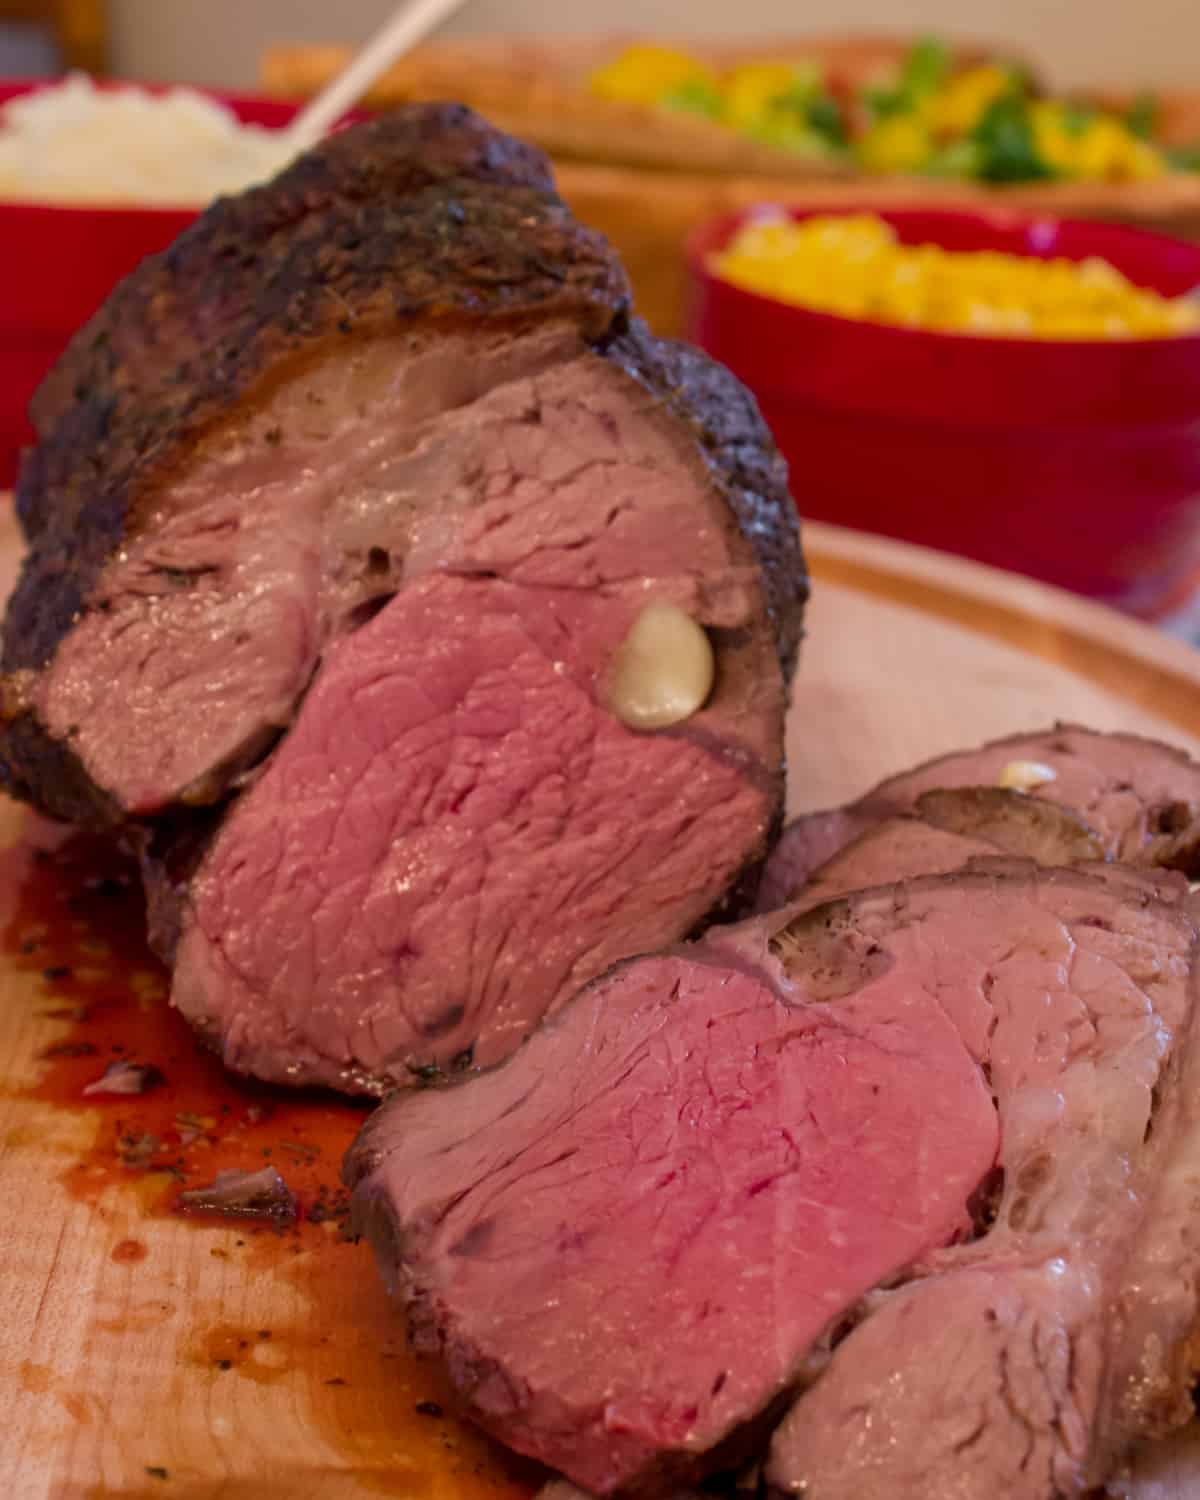 Medium rare roast beef sliced on a cutting board.